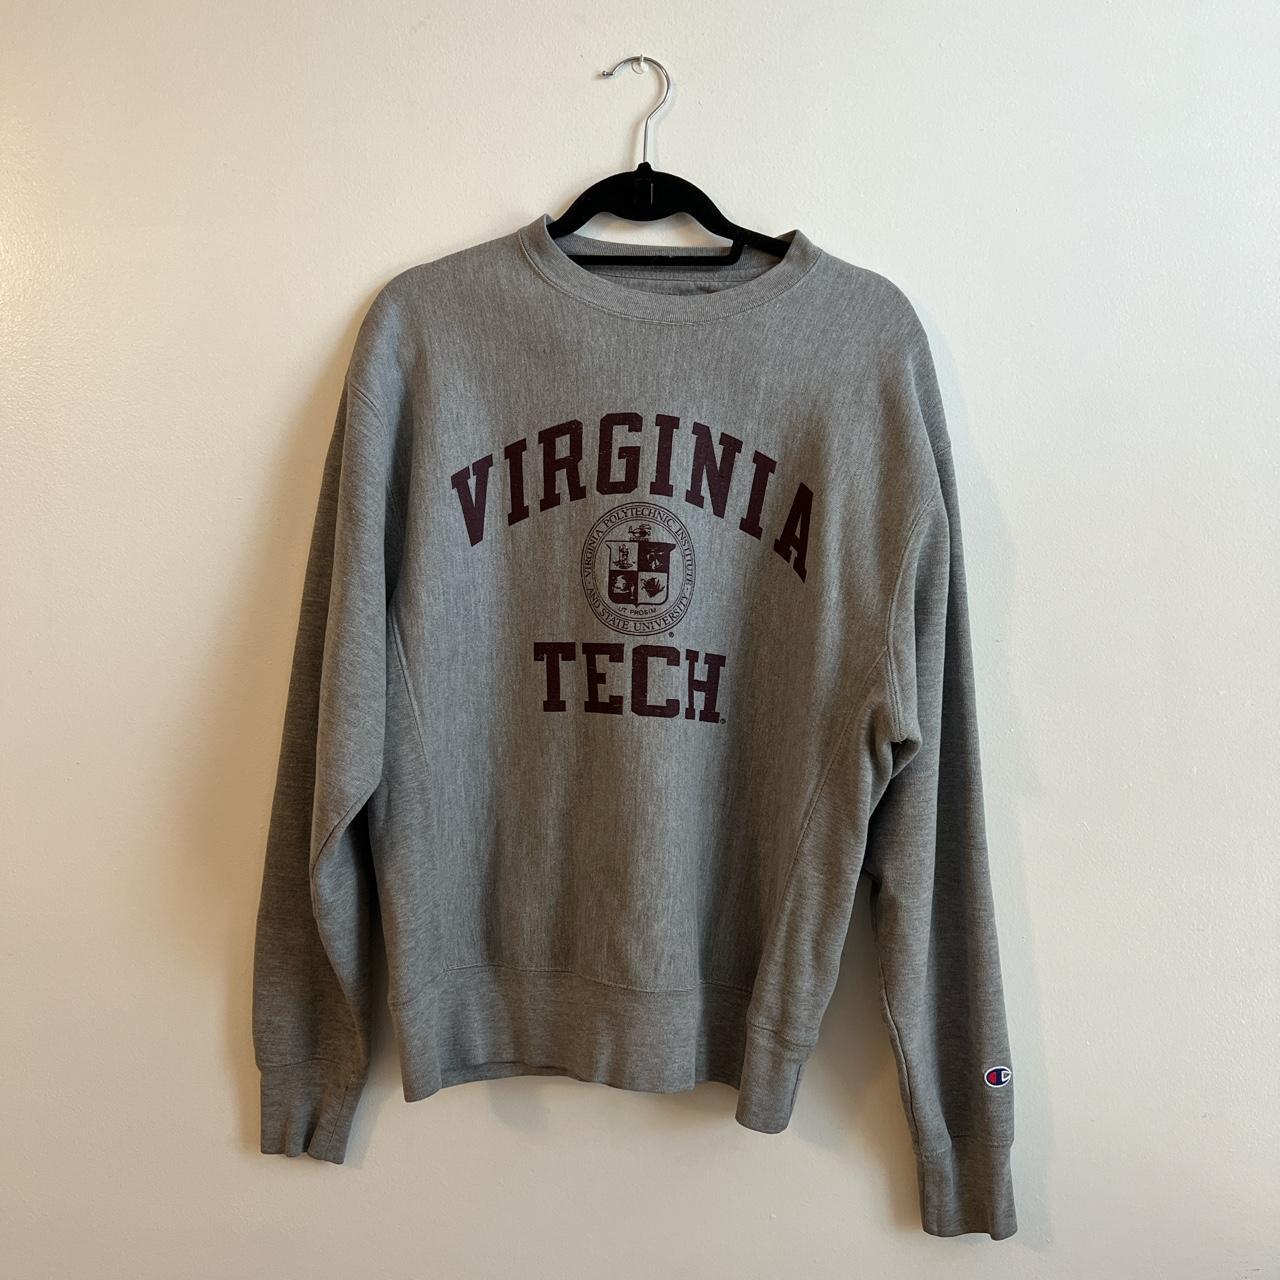 virginia tech grey and maroon sweater, size... - Depop